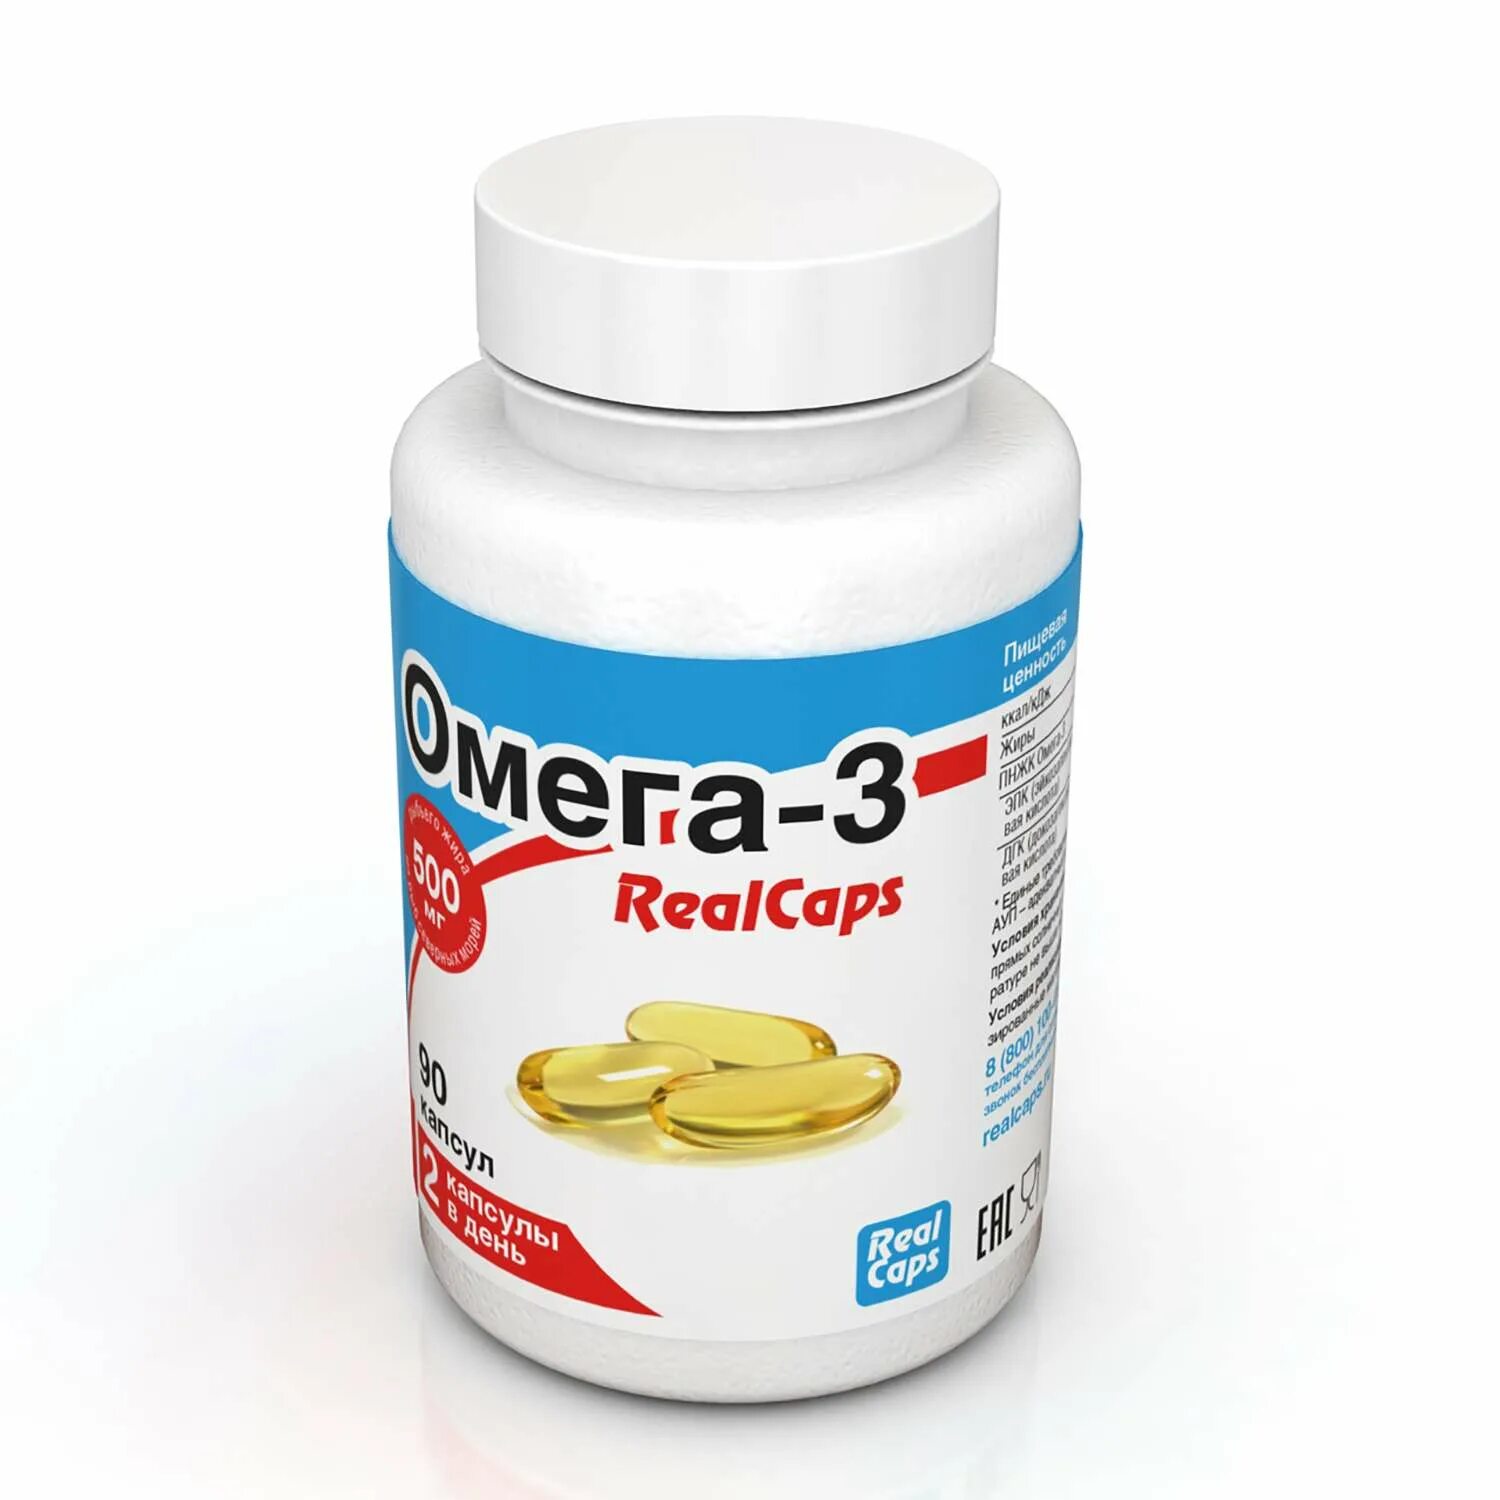 REALCAPS Омега-3 концентрат 90%. Омега 3 концентрат 60 капсулы 1000 мг 30 реалкапс. REALCAPS Омега 3 1000 мг. REALCAPS – Омега-3 концентрат 60%. Концентрат 90